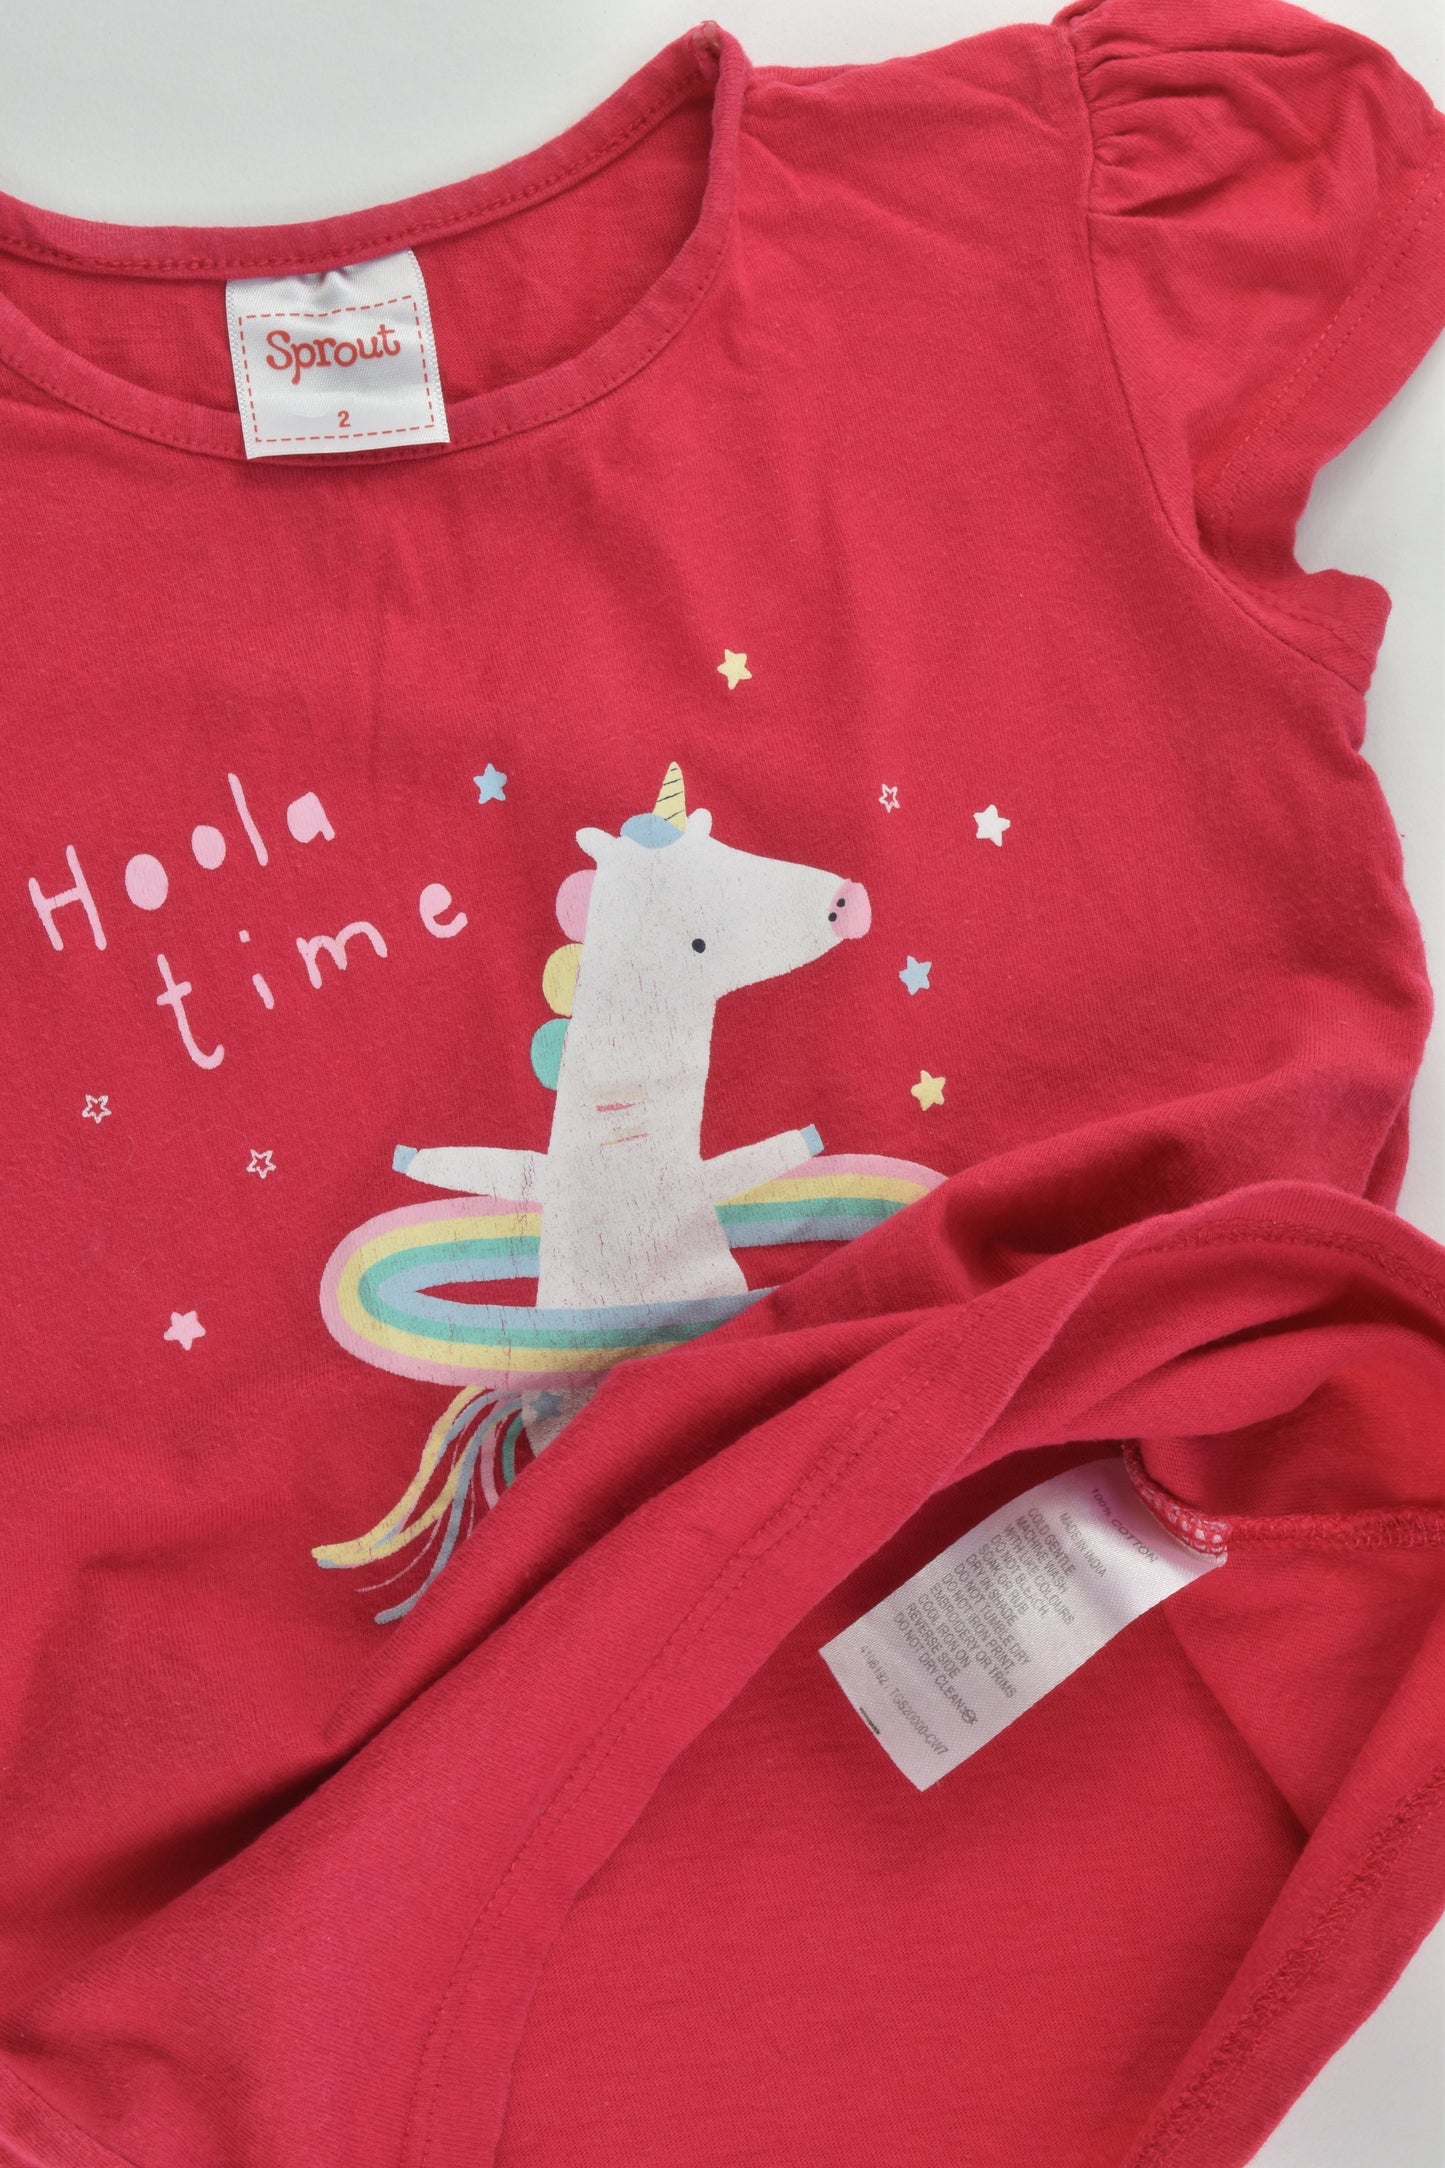 Sprout Size 2 Unicorn 'Hoola Time' T-shirt